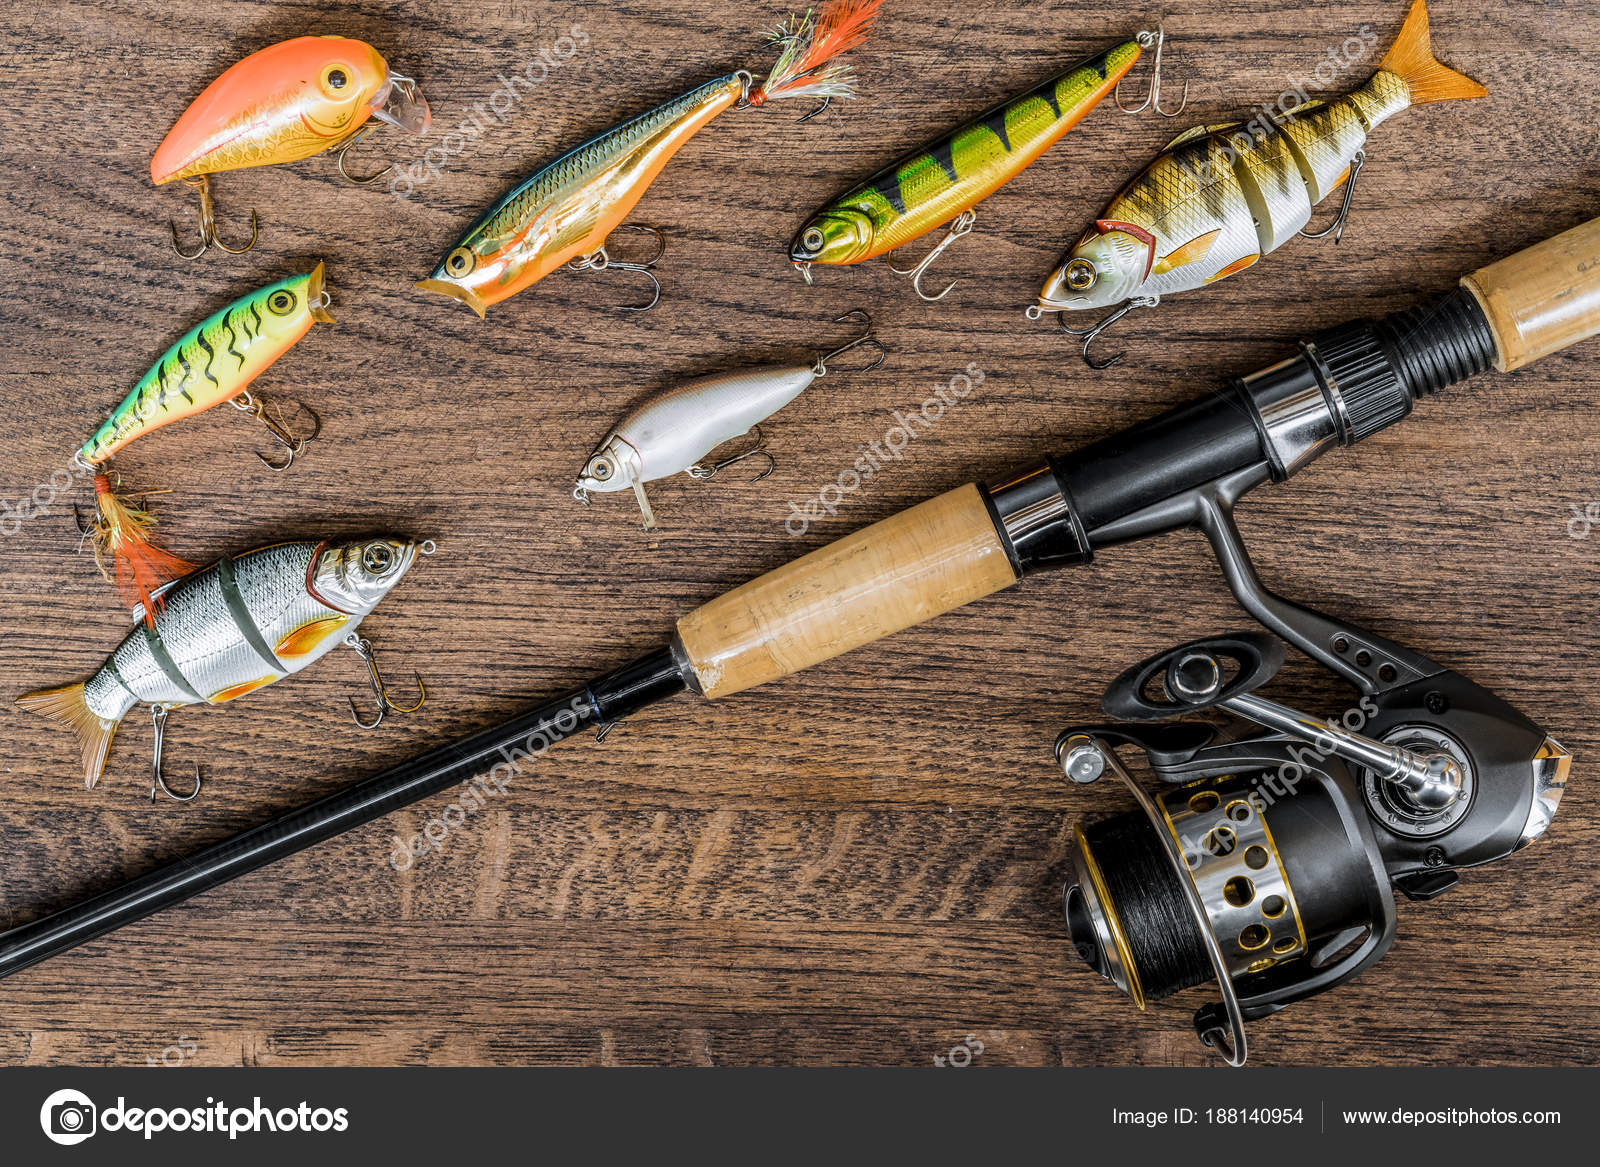 Fishing tackle on wooden background. — Stock Photo © kozyrev-vjacheslav  #188140954